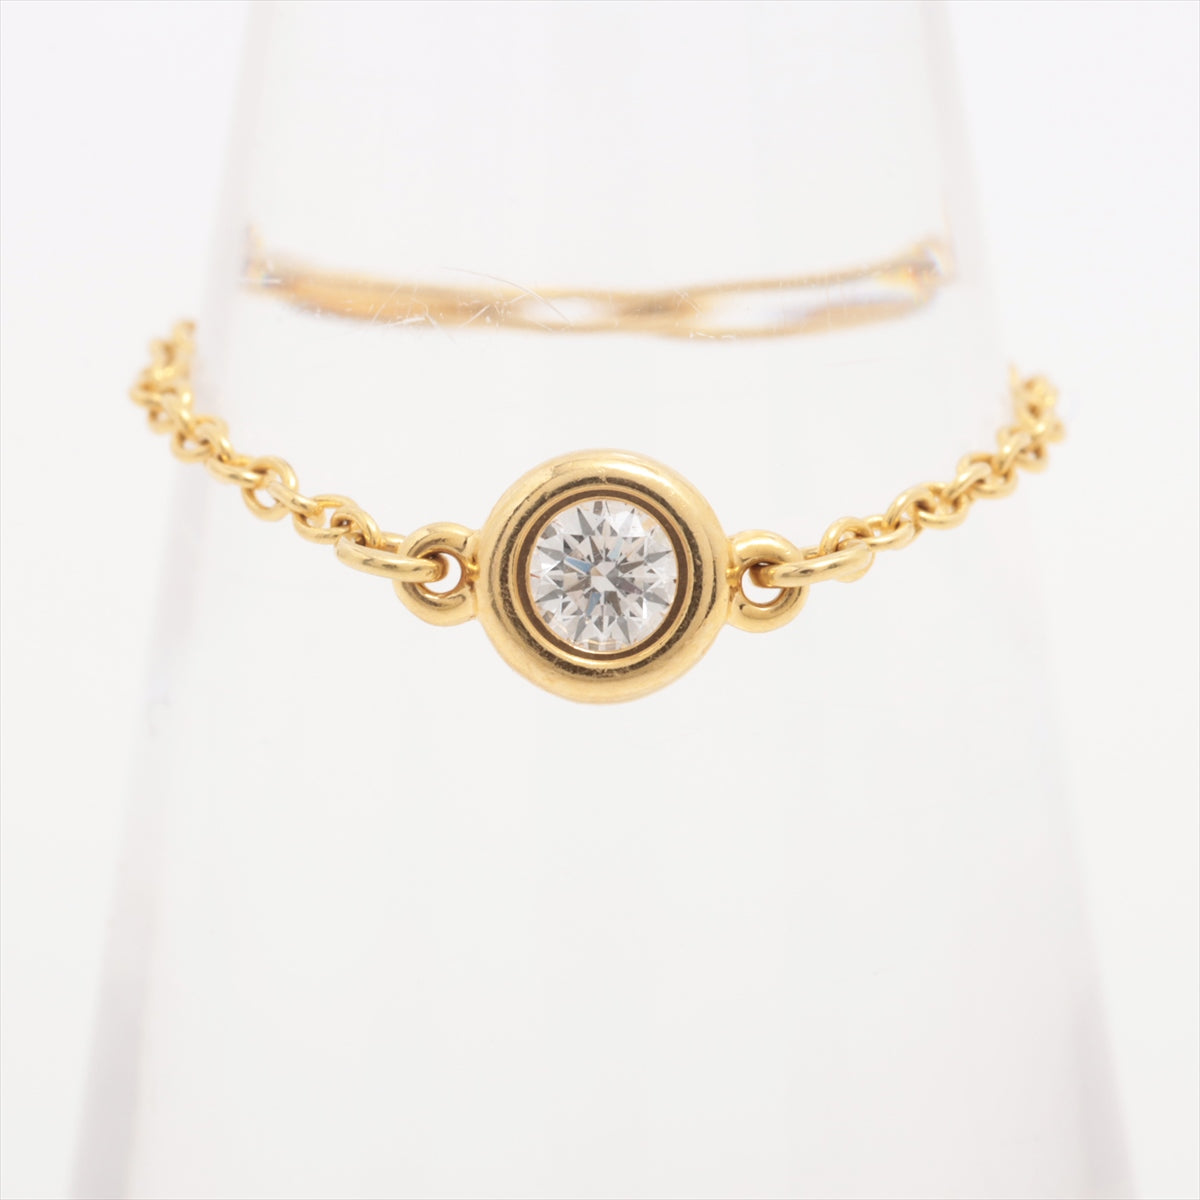 Tiffany Bazaar 1P diamond ring 750 (YG) 0.6g diameter approximately 4.41mm